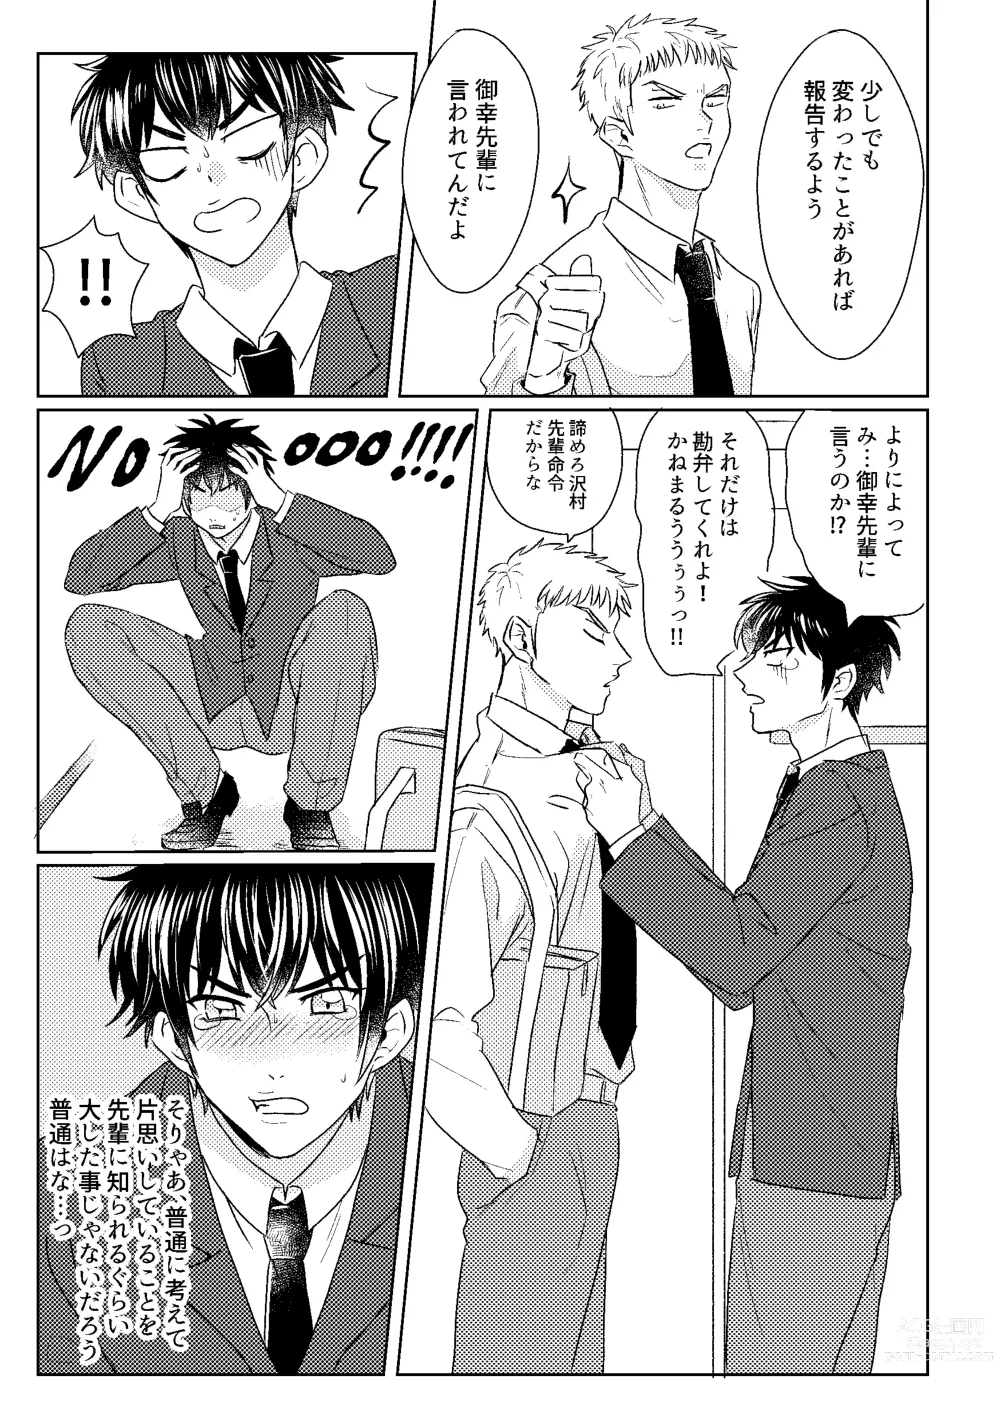 Page 7 of doujinshi Hatsukoi Sparkle